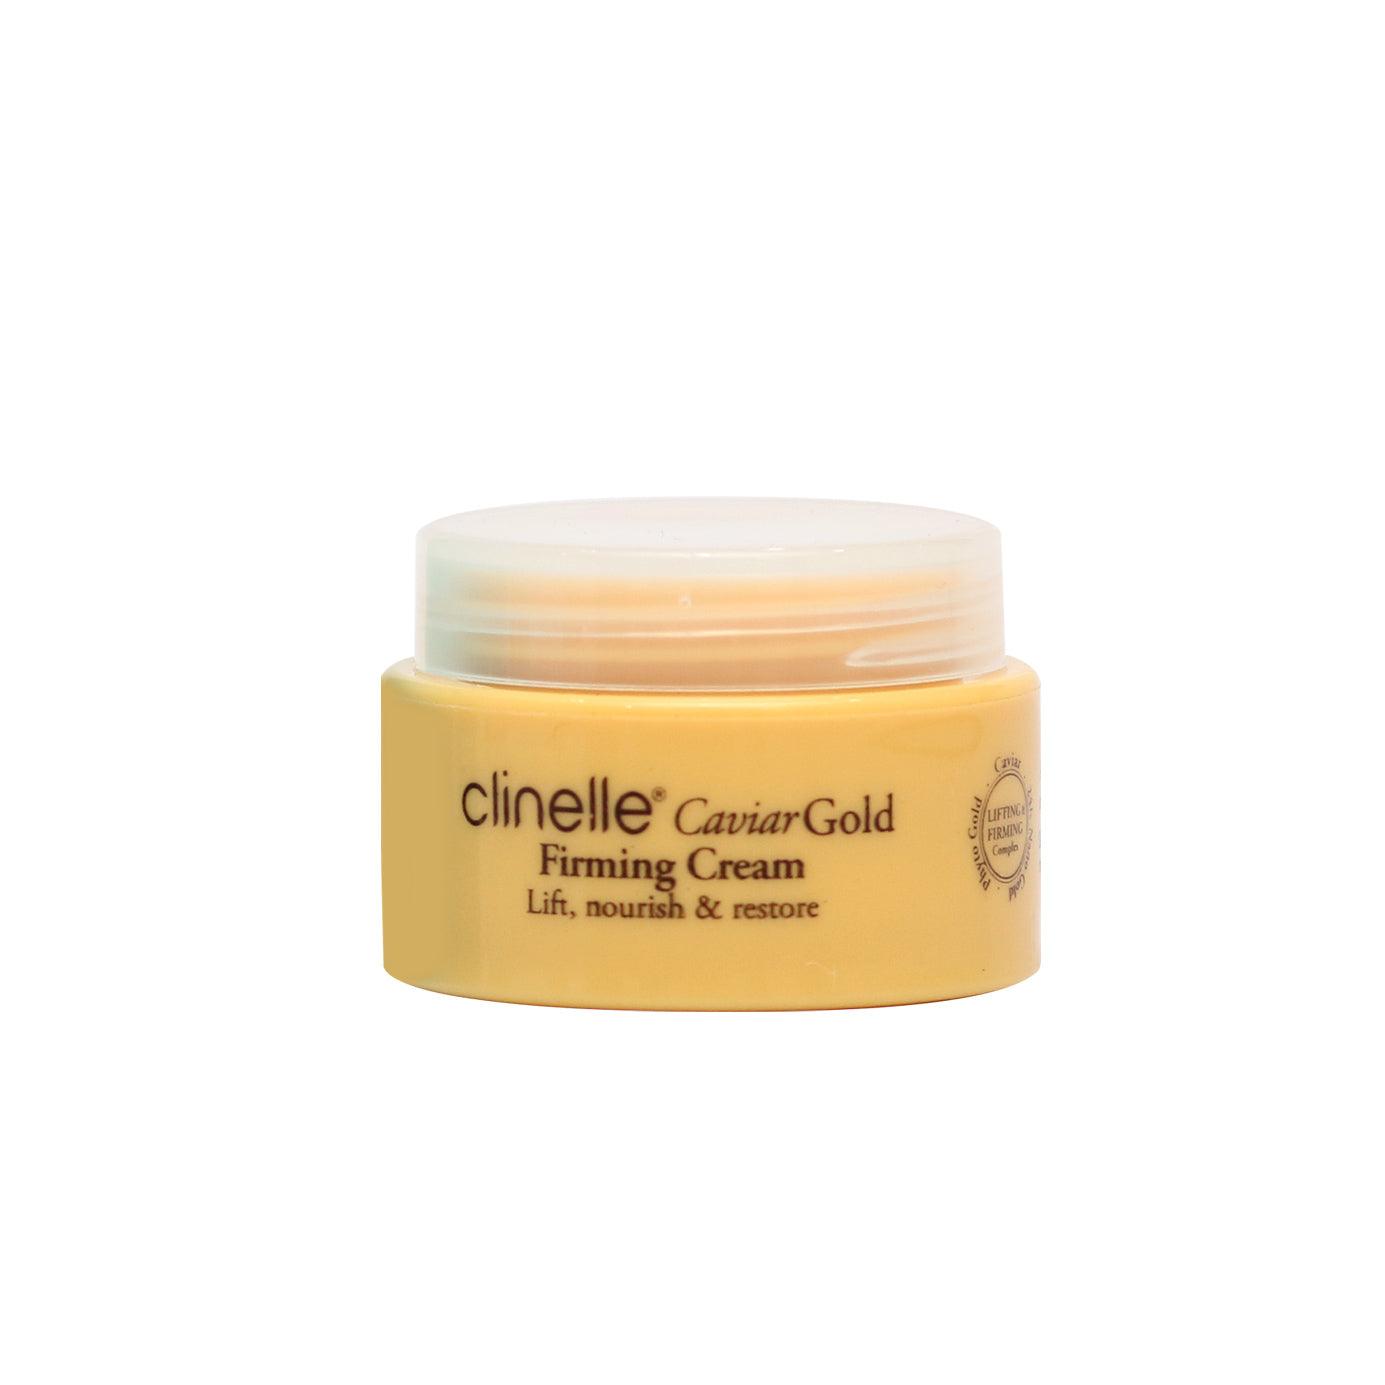 Clinelle Caviar Gold Firming Cream 8ml - Clinelle